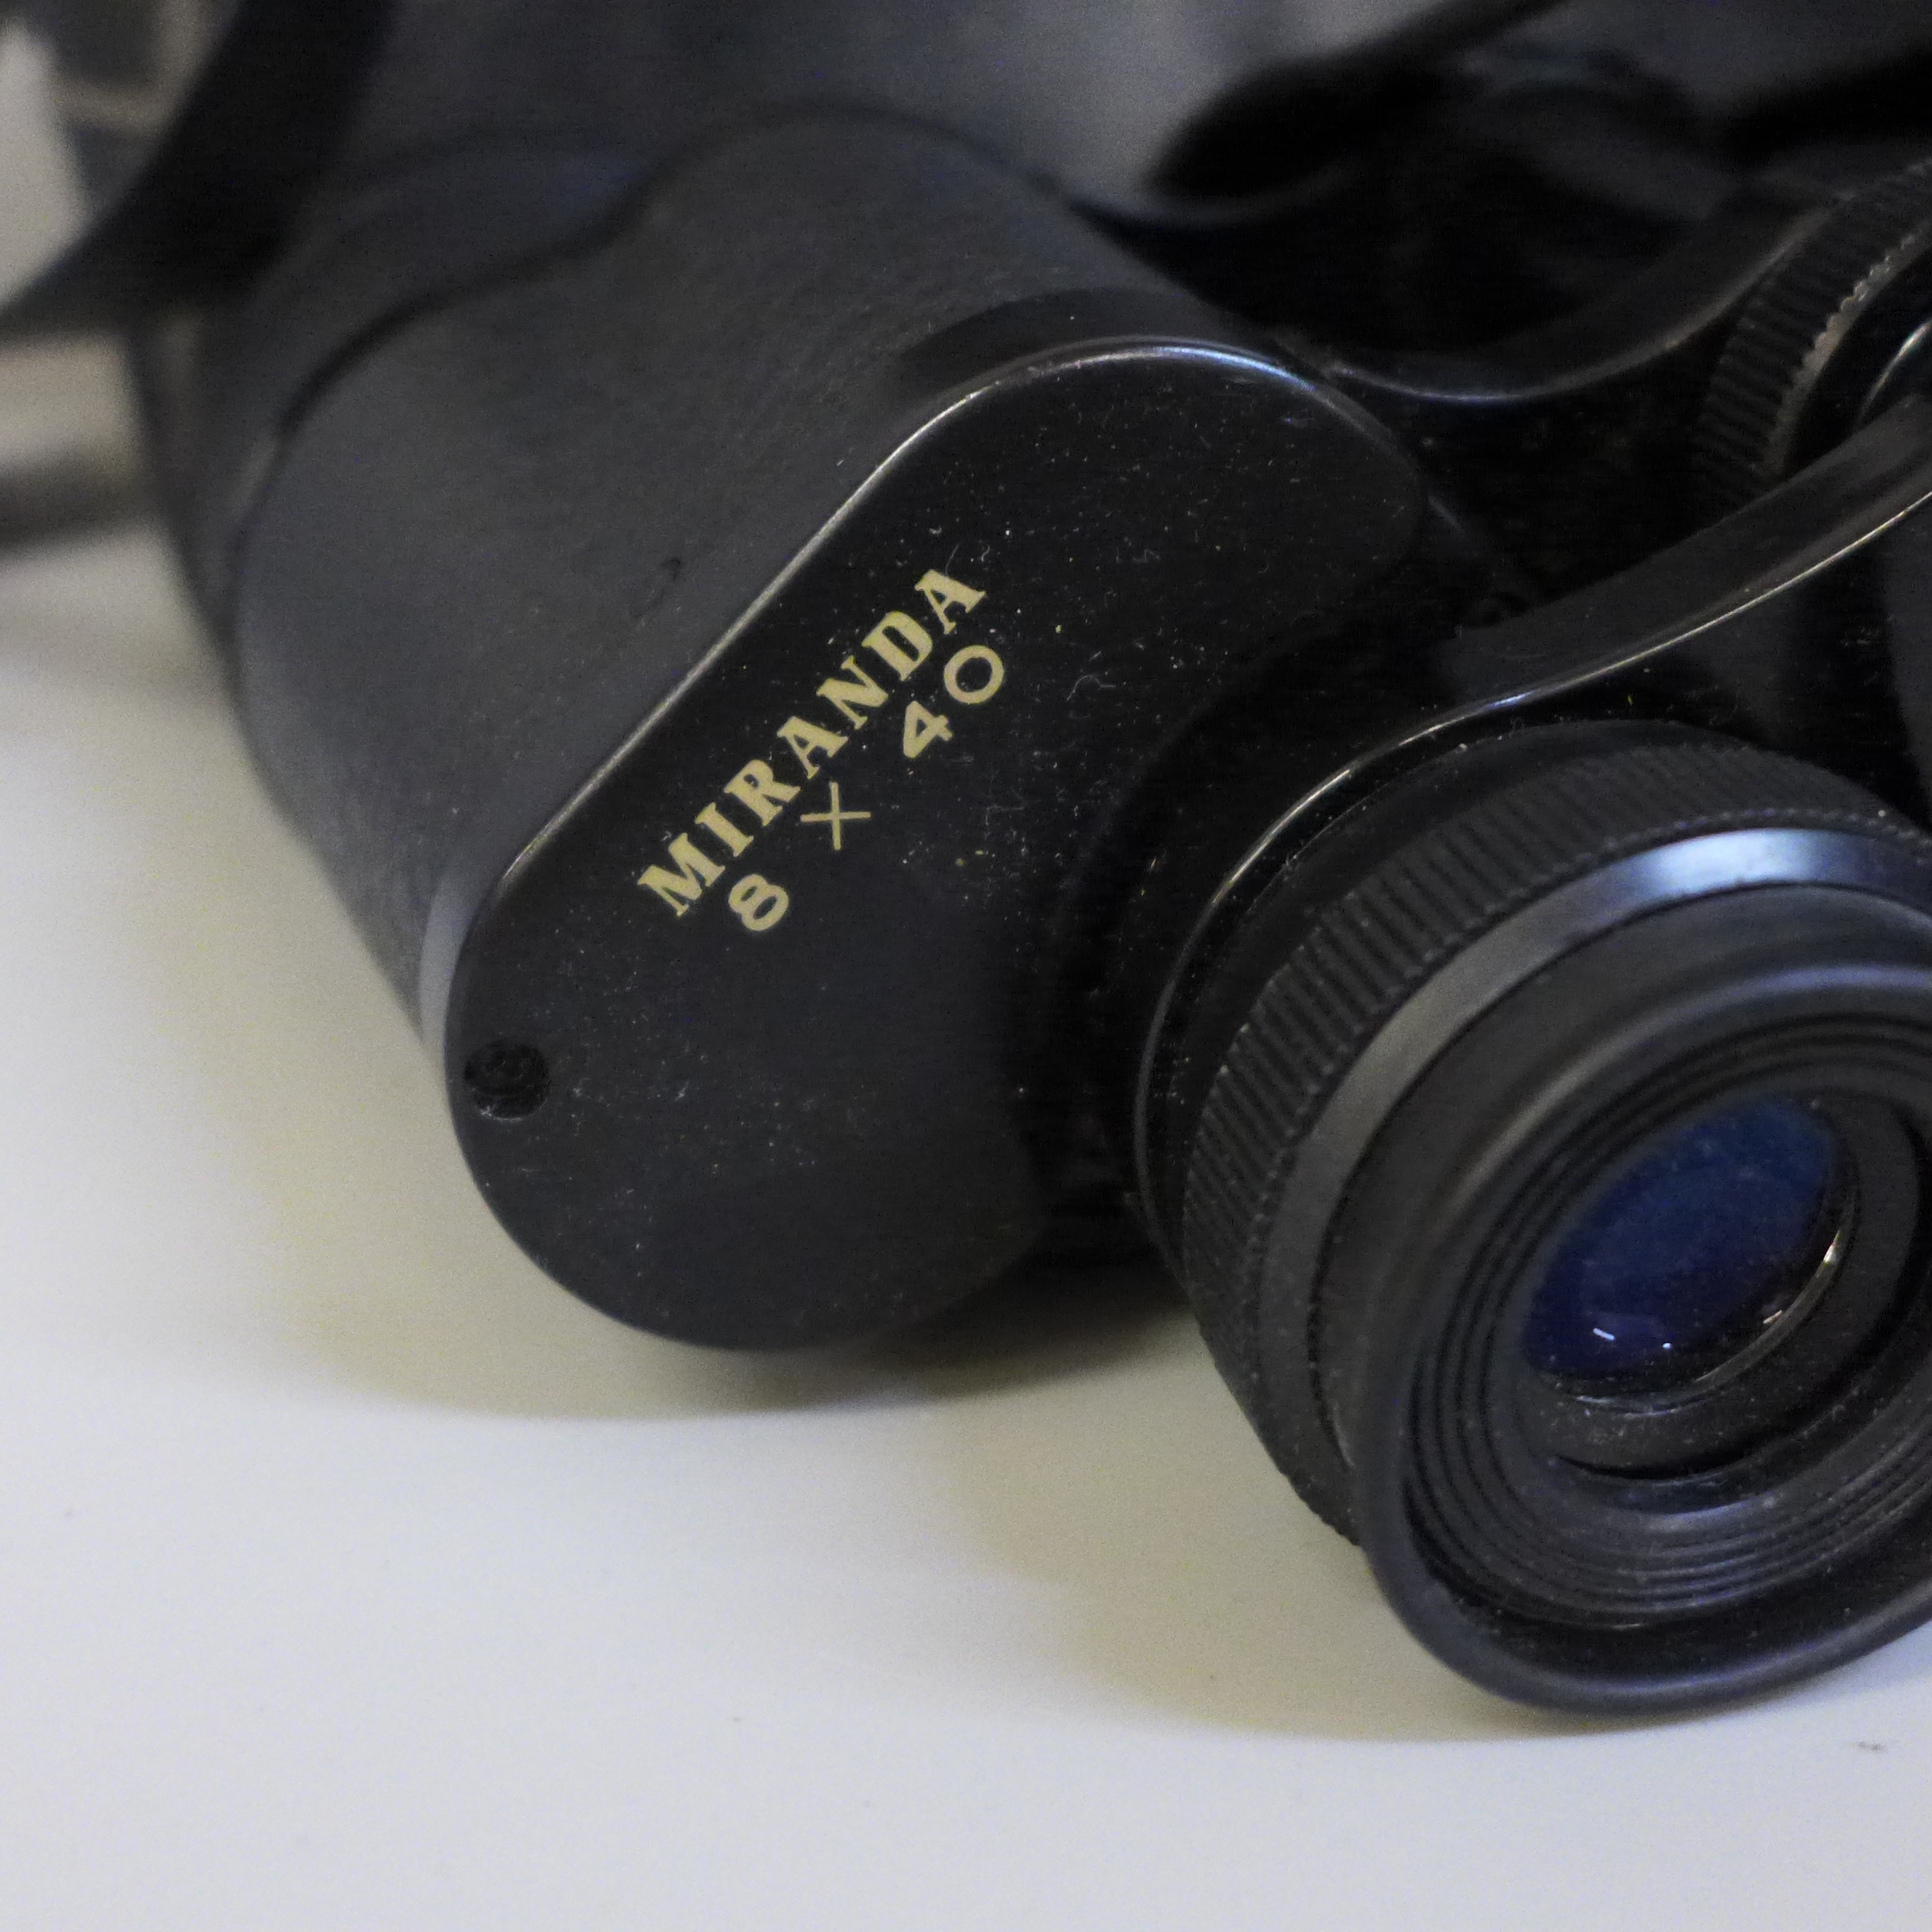 Two pairs of cased binoculars, Swift No. 721 8 x 40 and Miranda wide angle 8 x 40 - Image 2 of 2